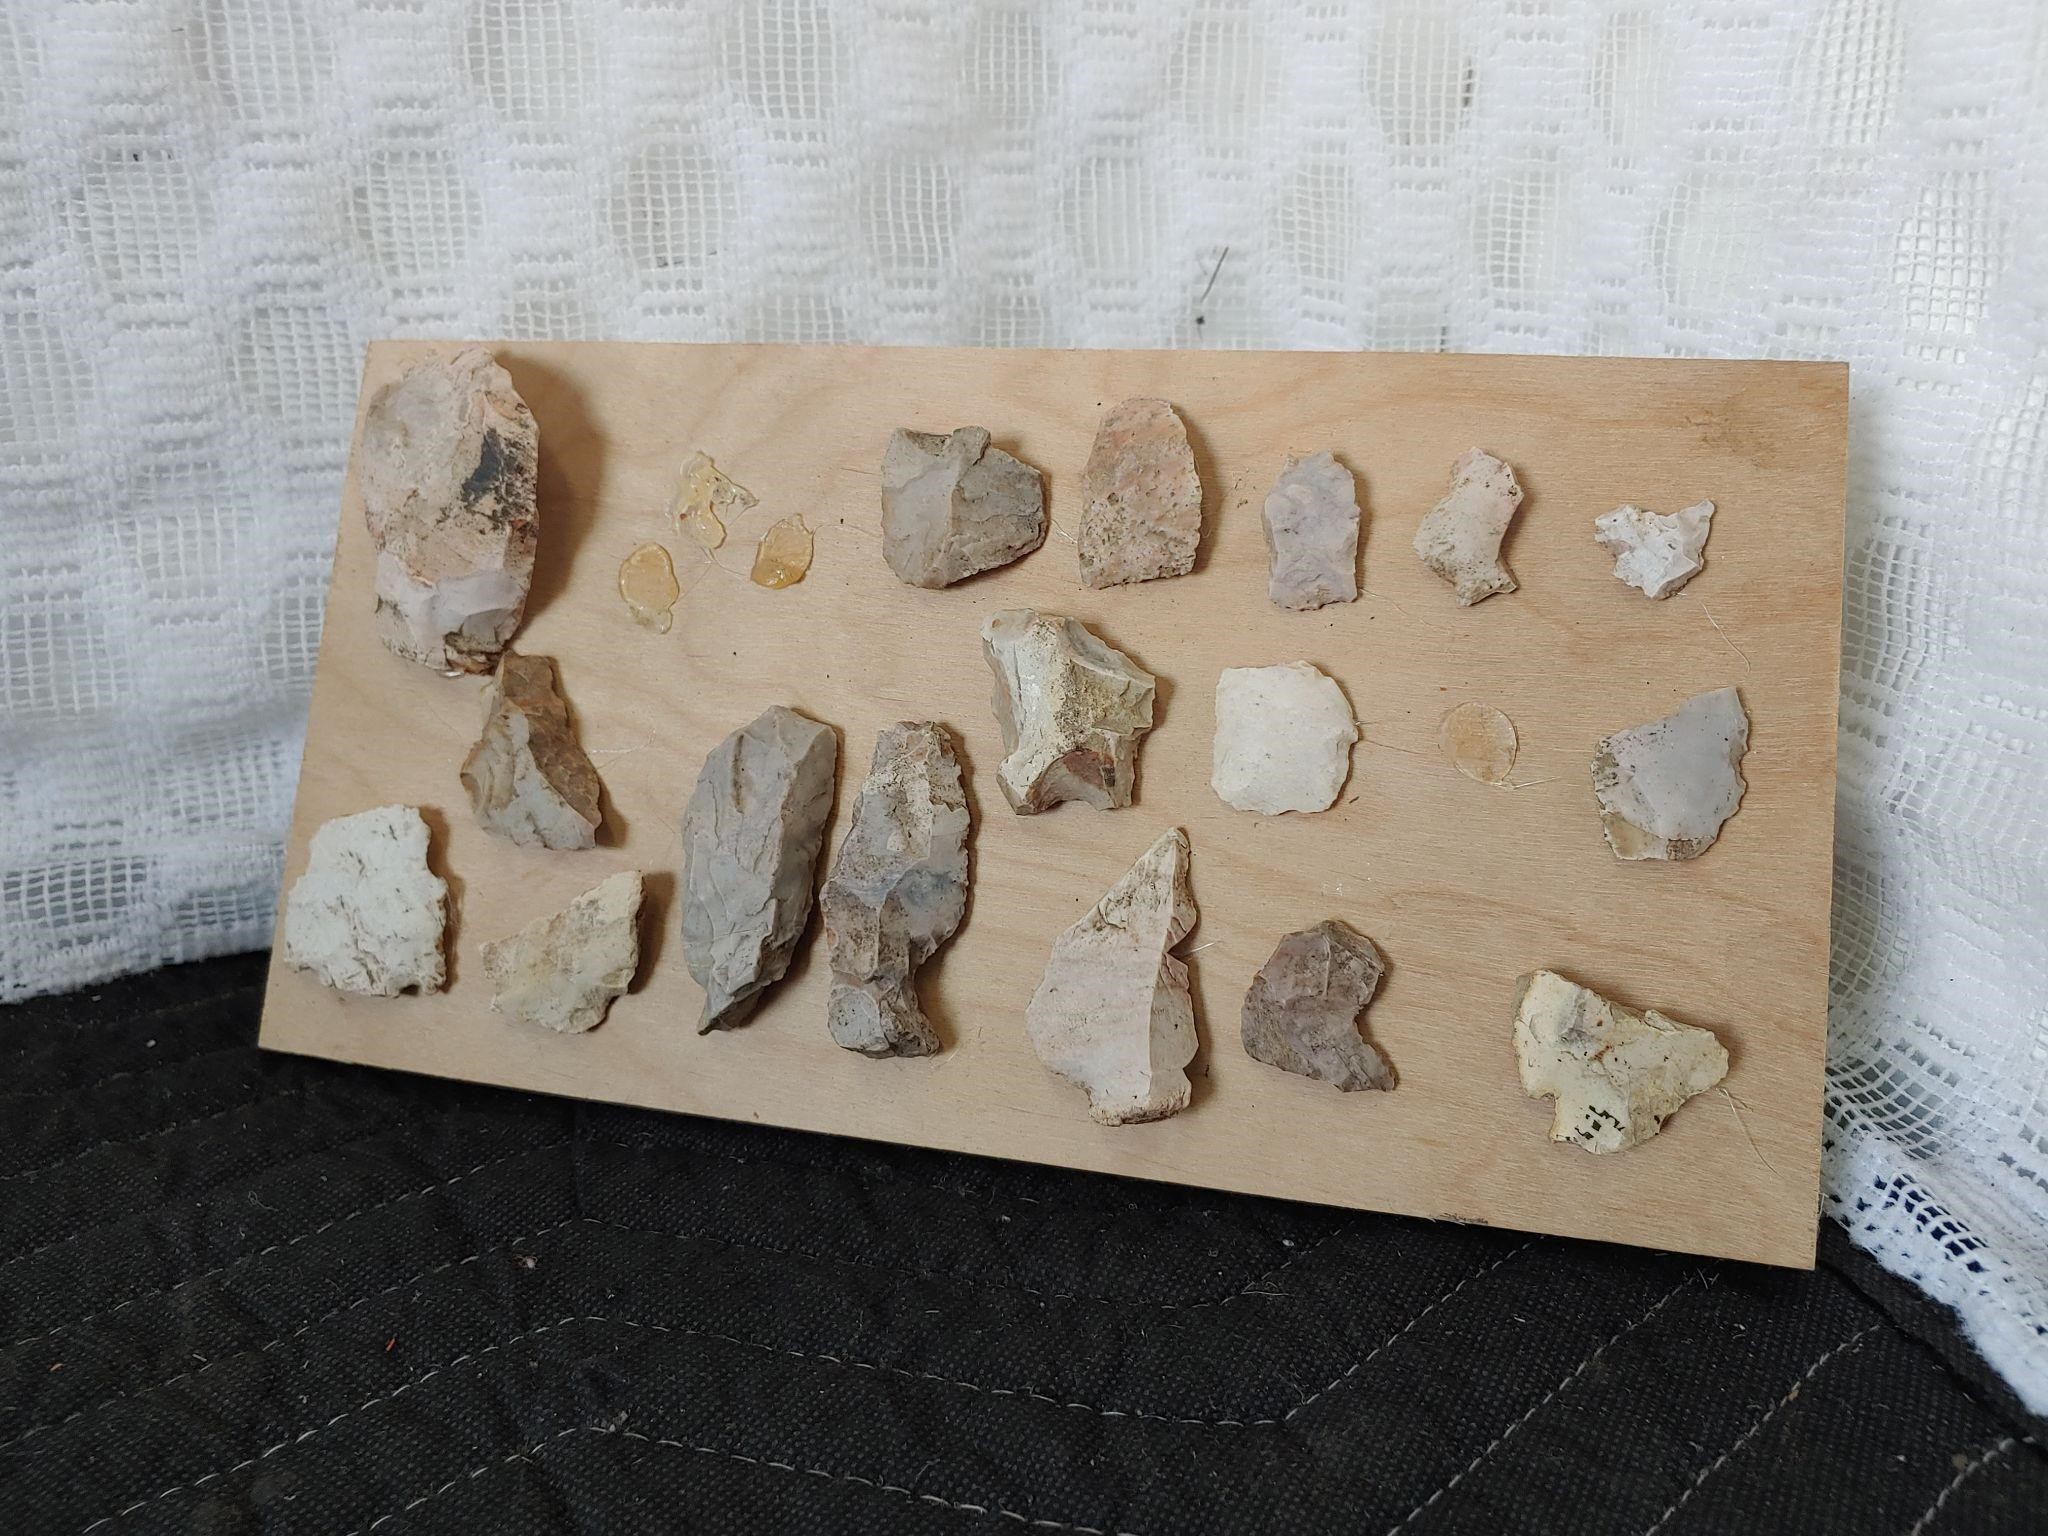 Assortment of slate stone flakes / arrowheads